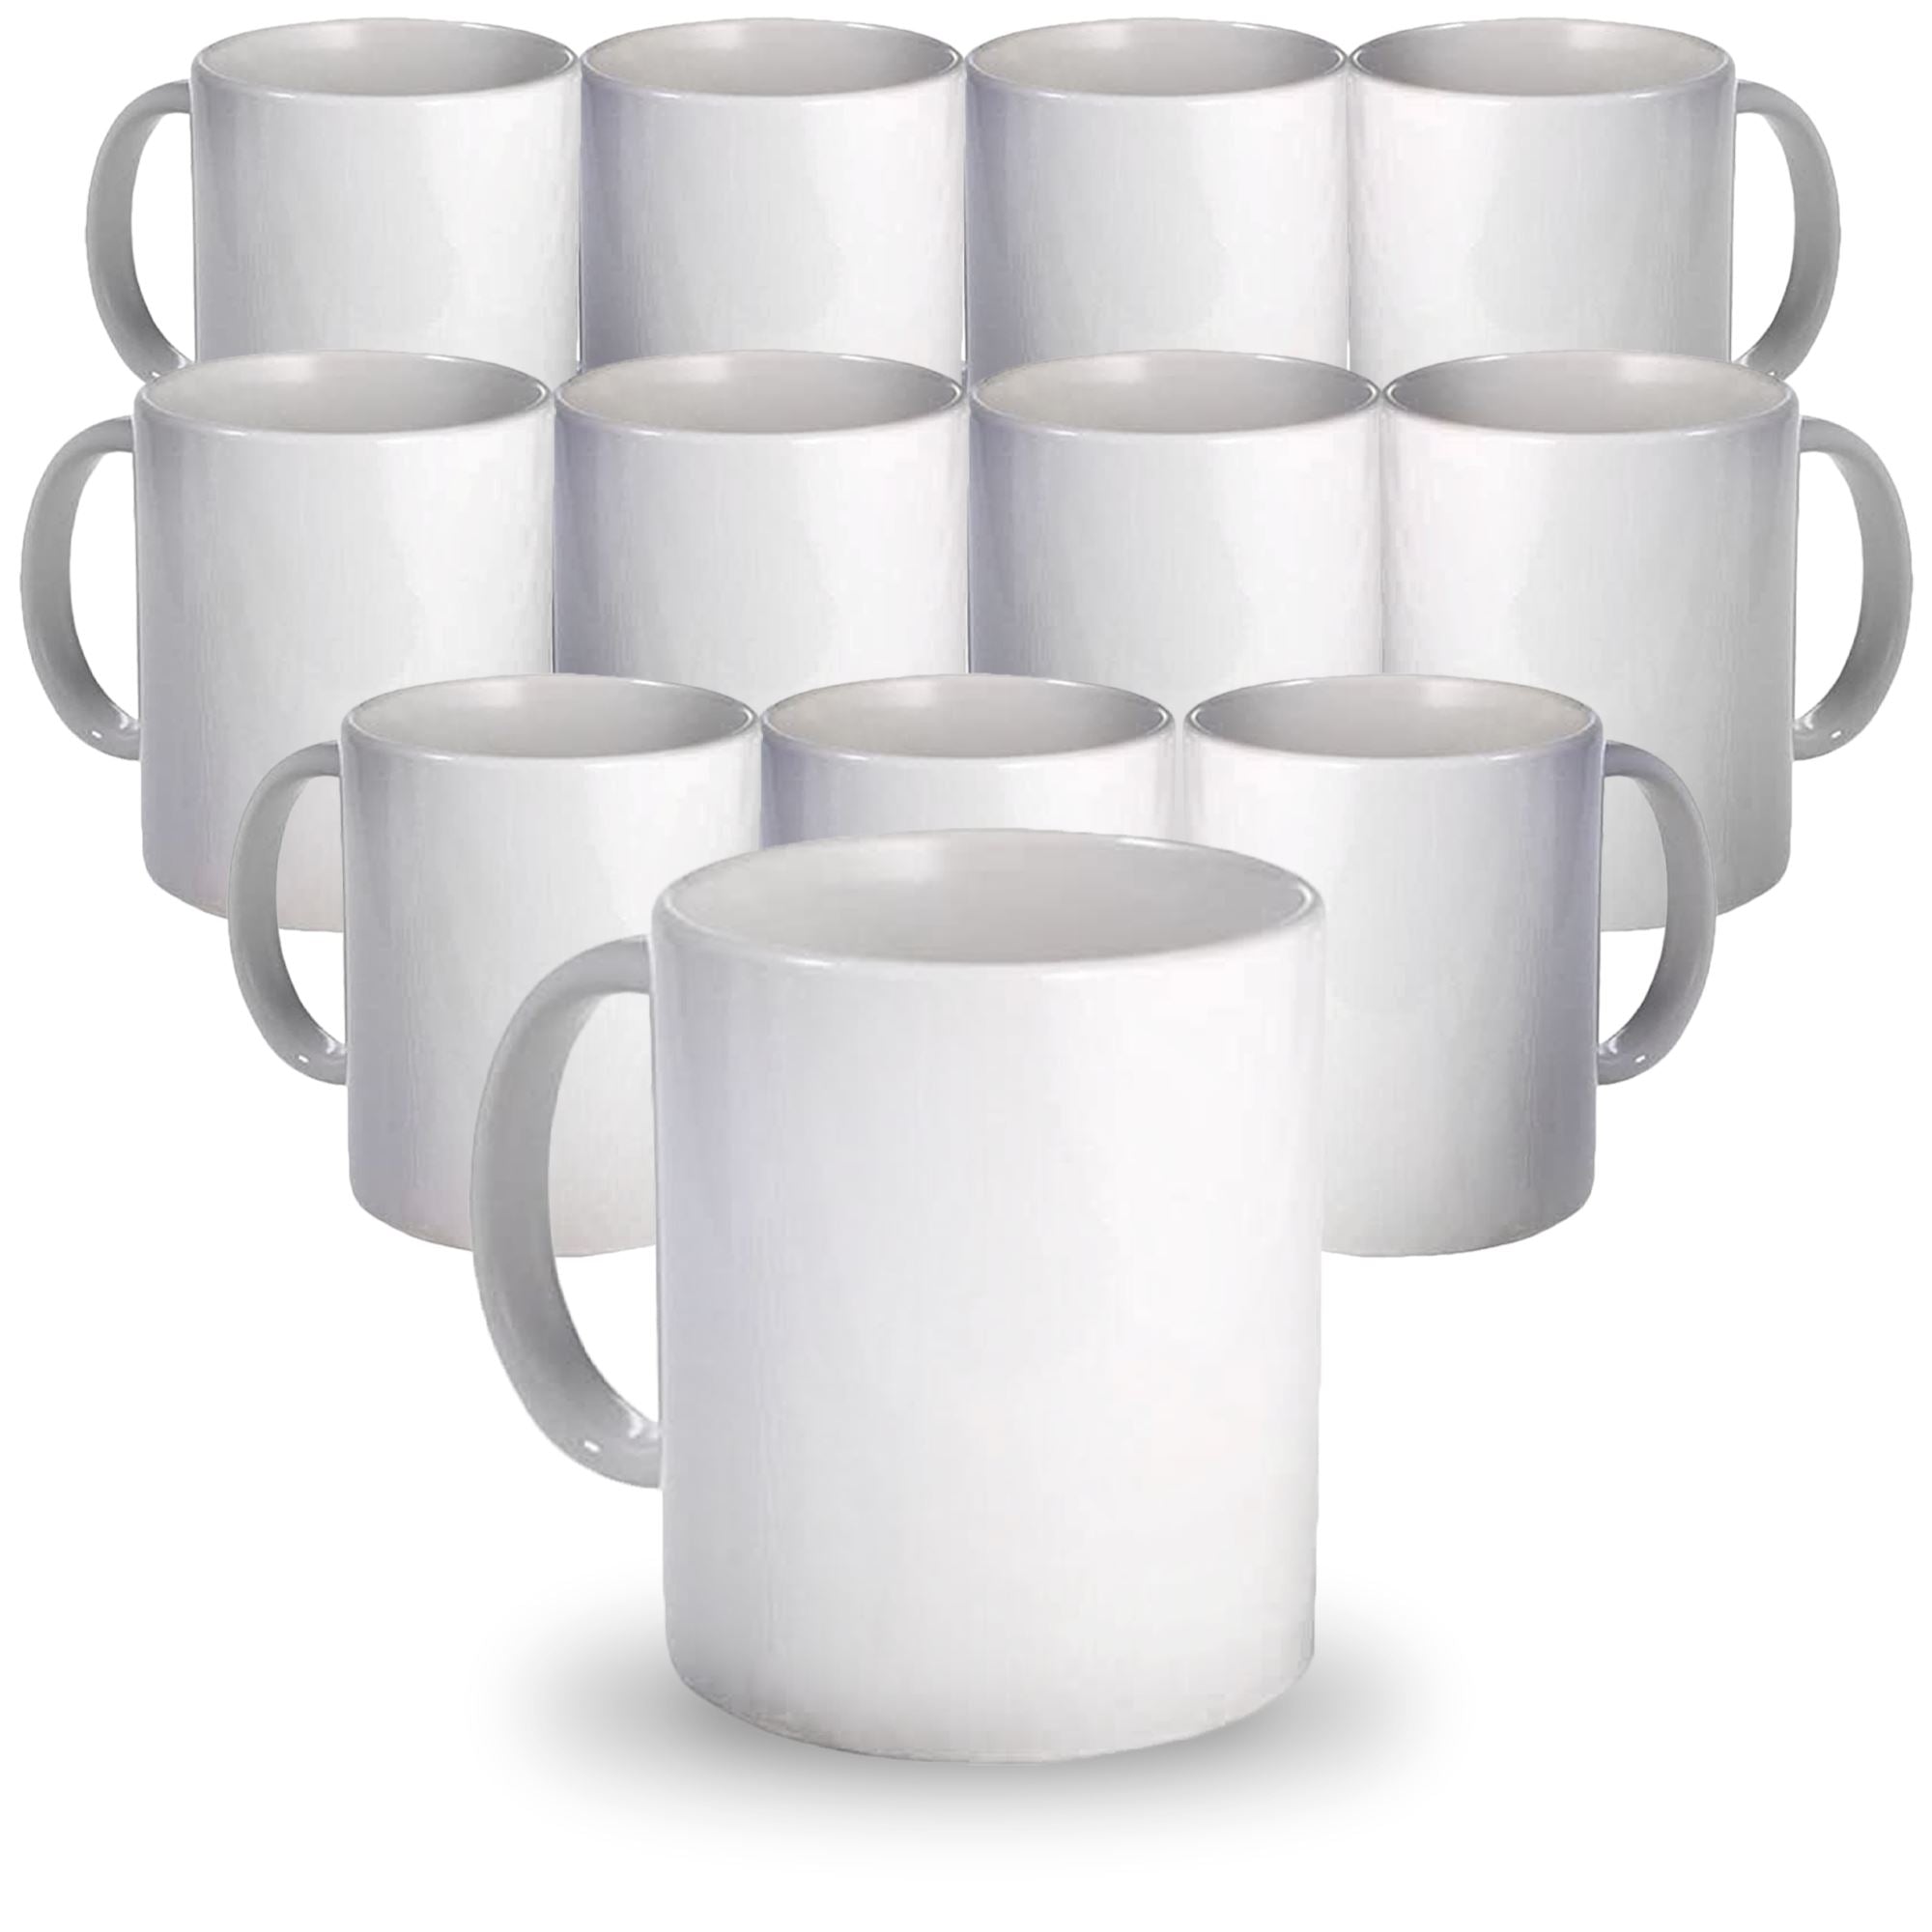  Crafting Coffee Mug 11oz White - Excuse For A